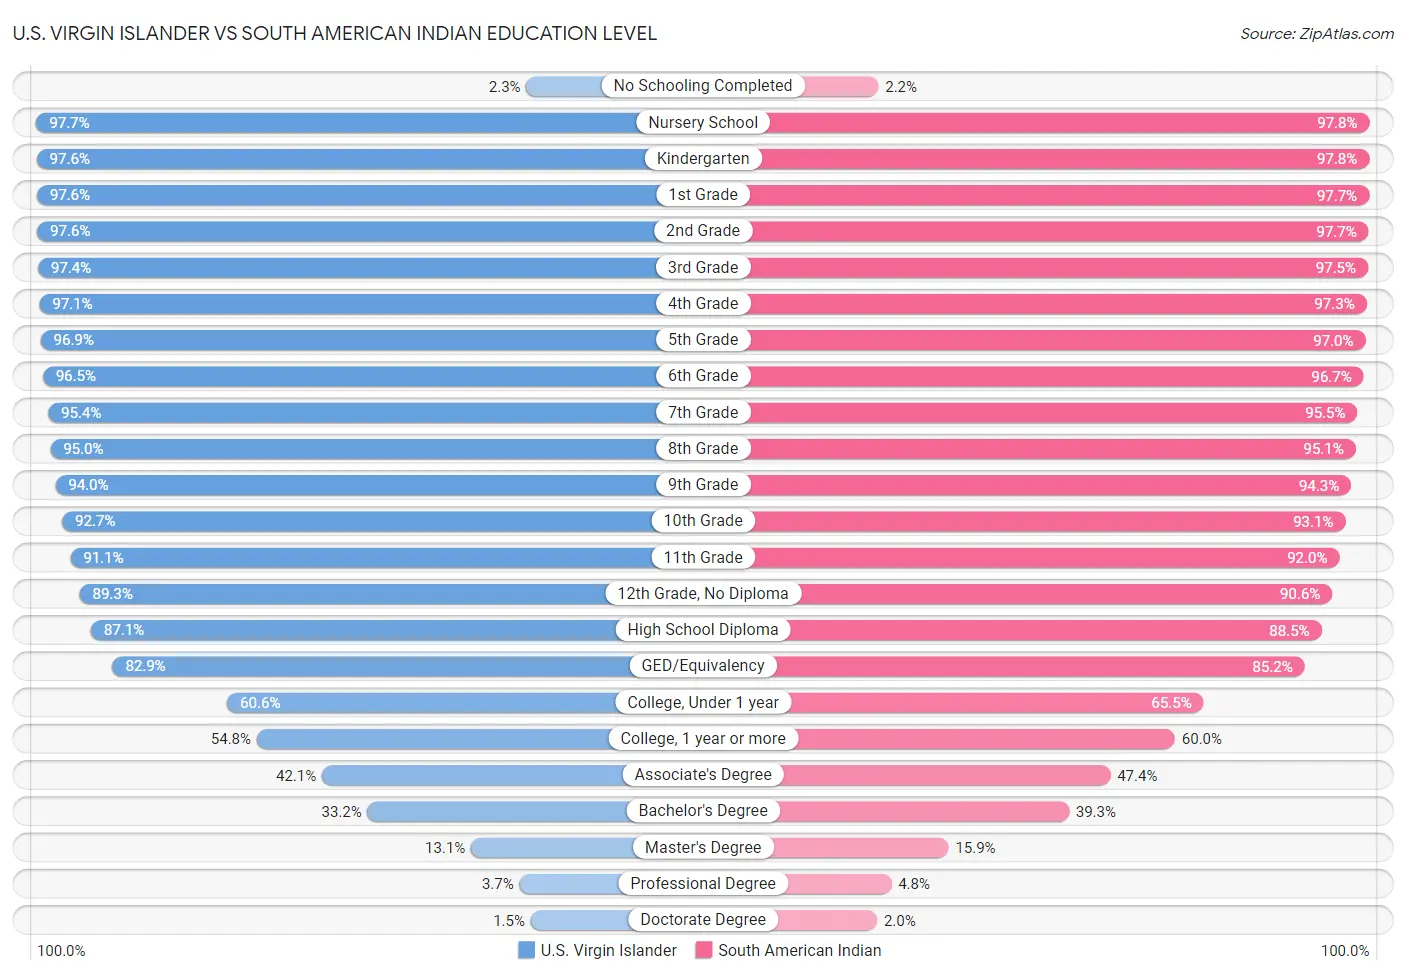 U.S. Virgin Islander vs South American Indian Education Level